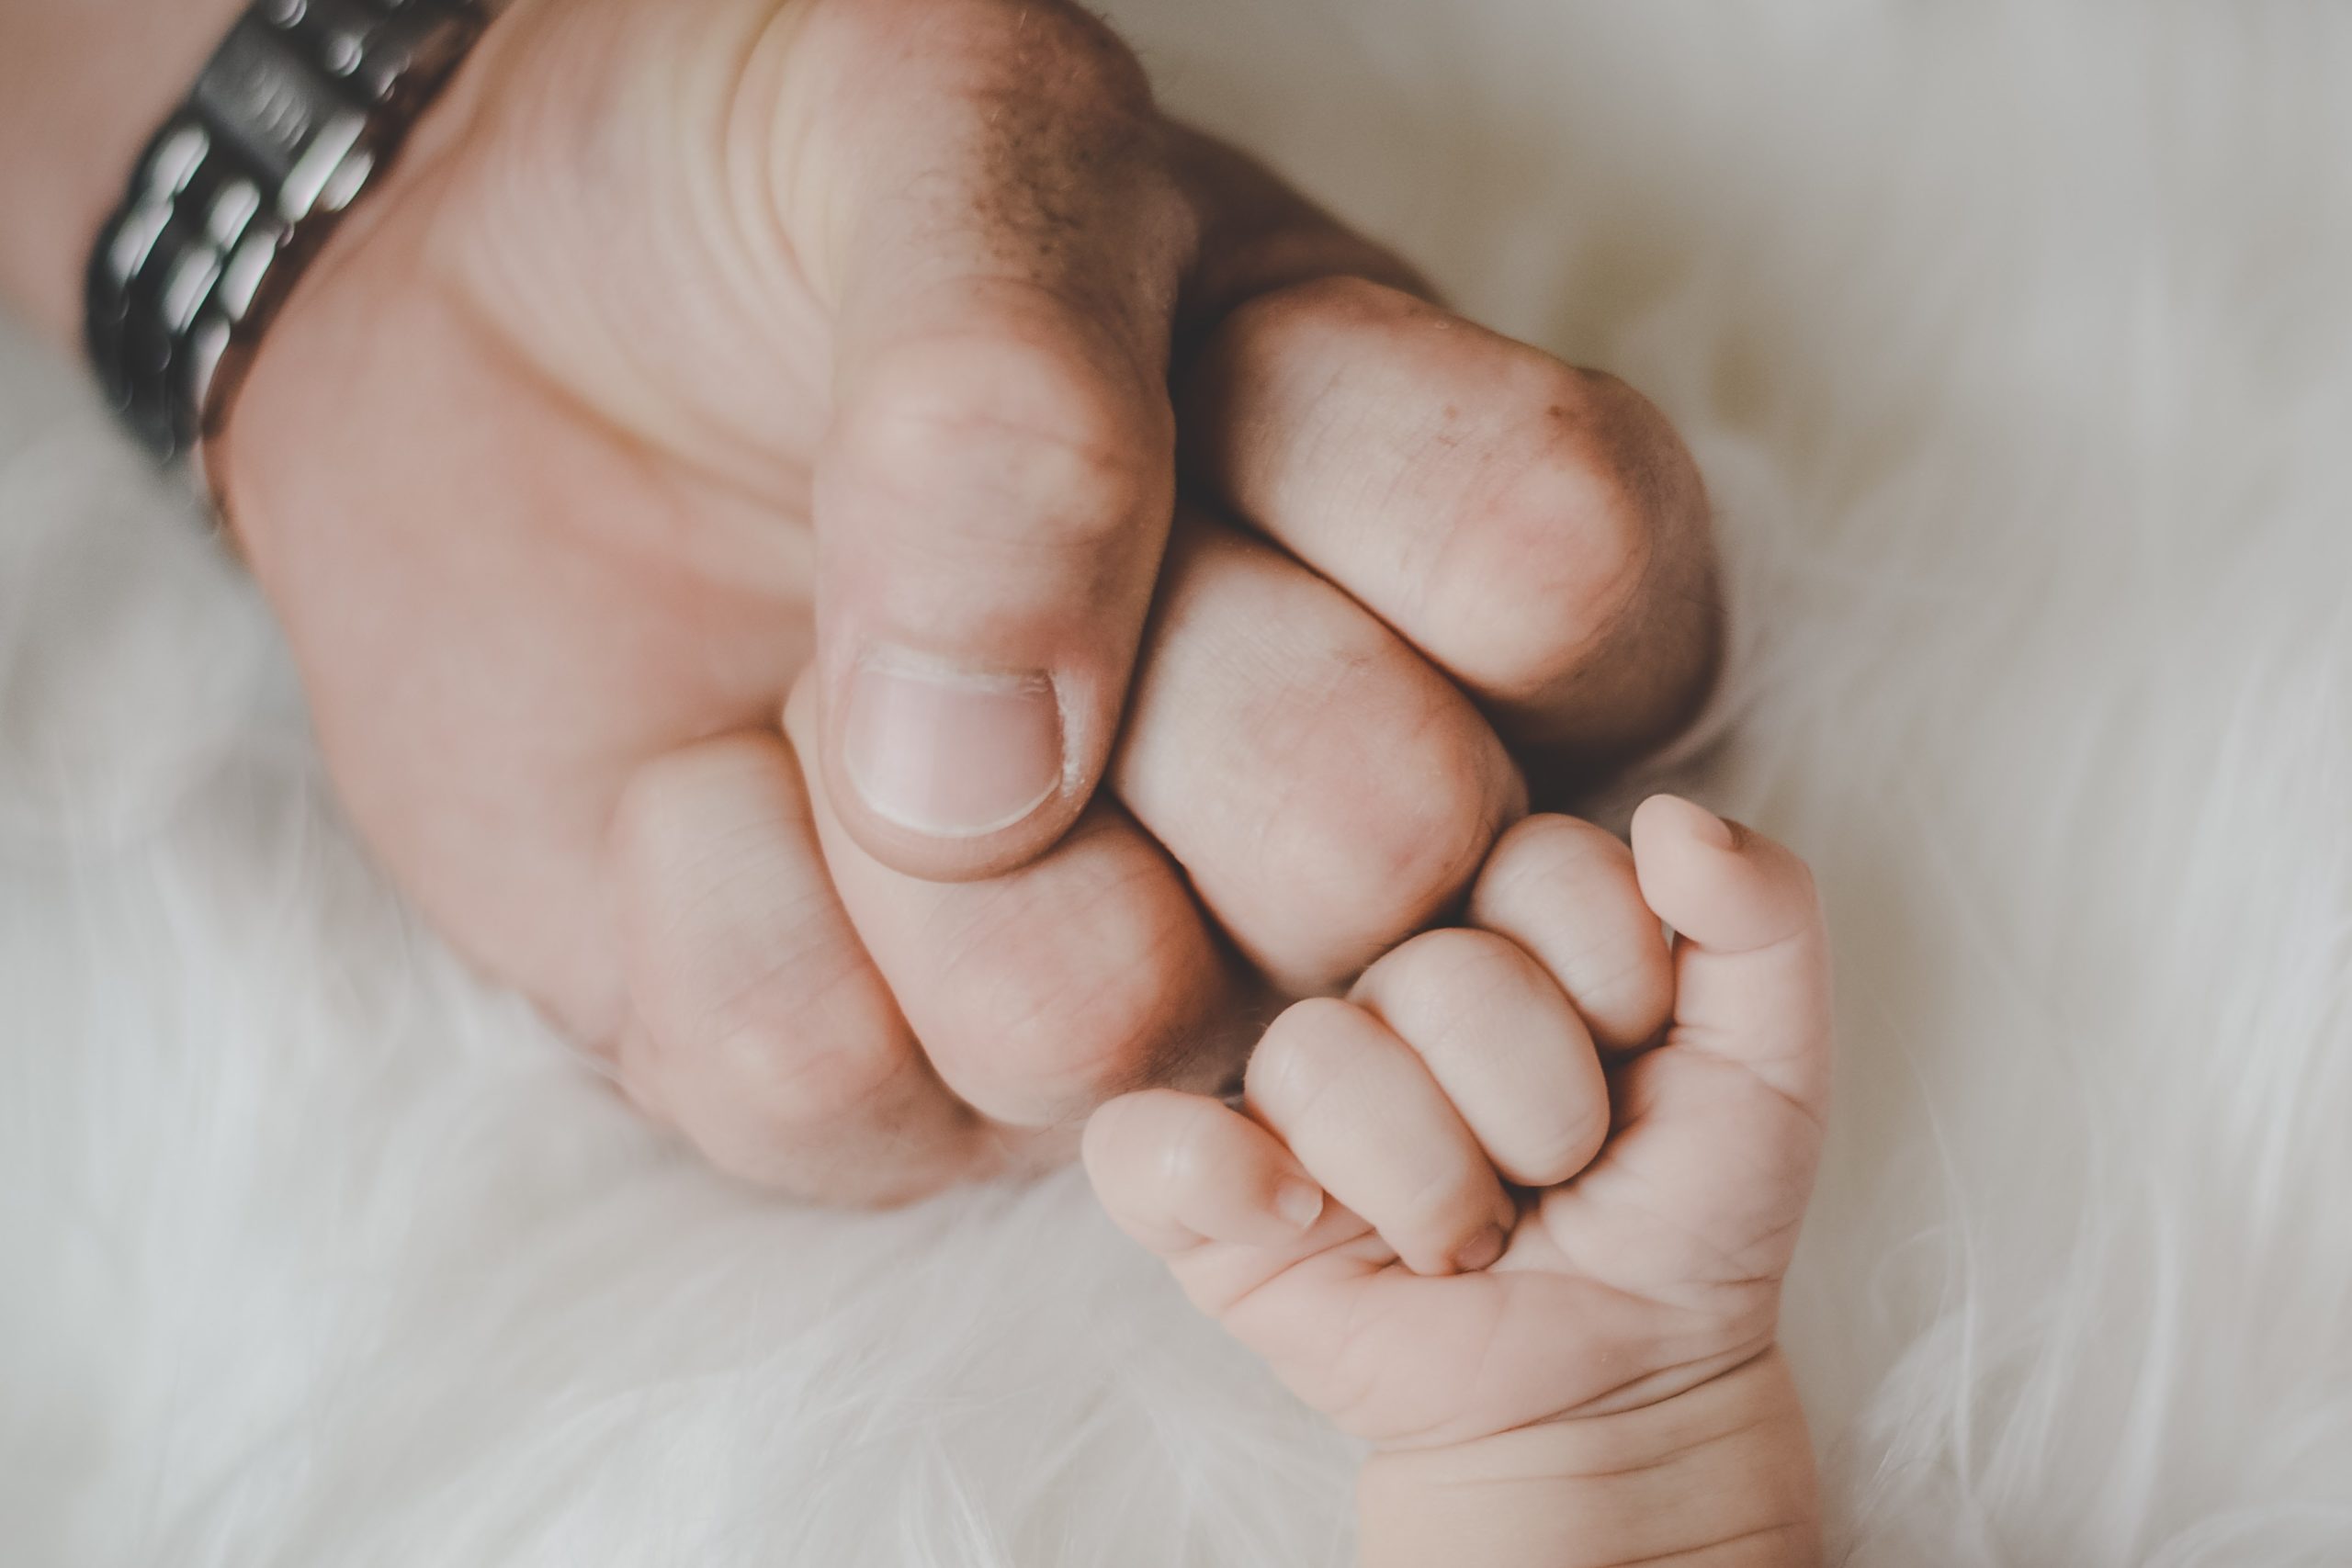 Fathers’ Postnatal Hormone Levels Predict Later Caregiving, Study Shows